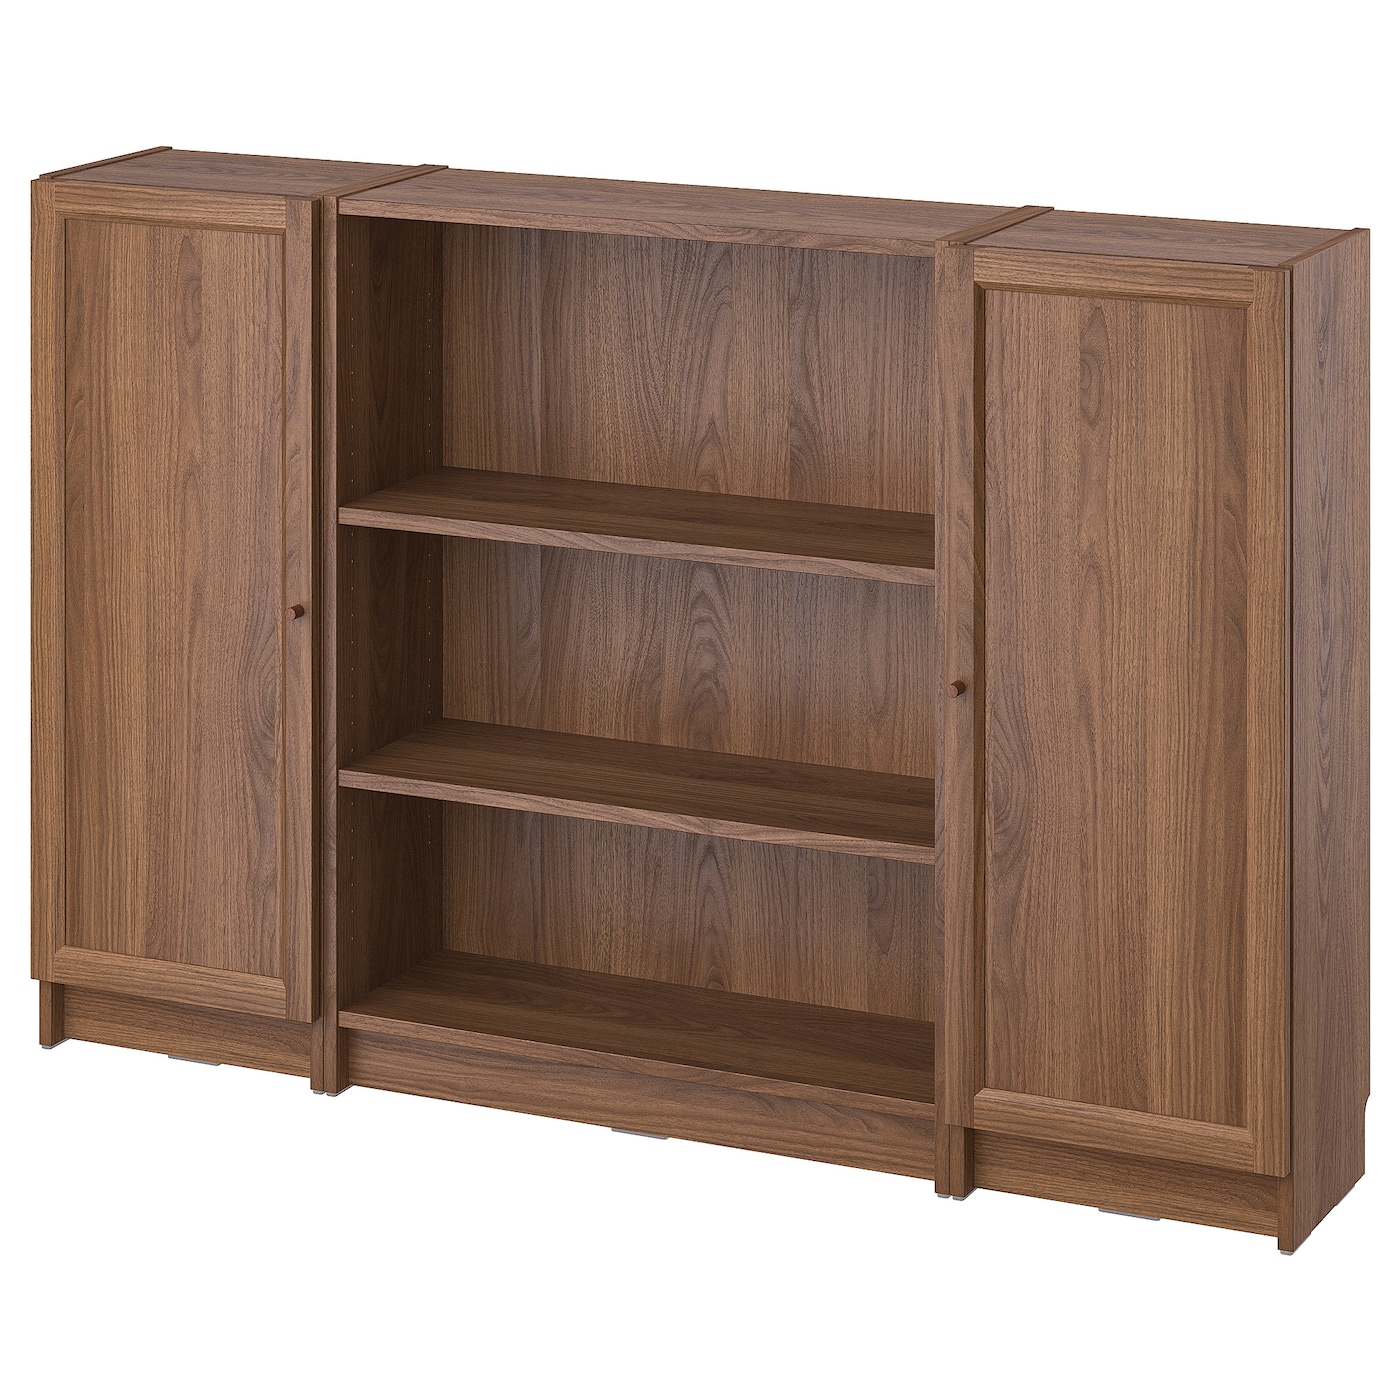 Книжный шкаф -  BILLY / OXBERG IKEA/ БИЛЛИ/ ОКСБЕРГ ИКЕА, 160х106 см, коричневый